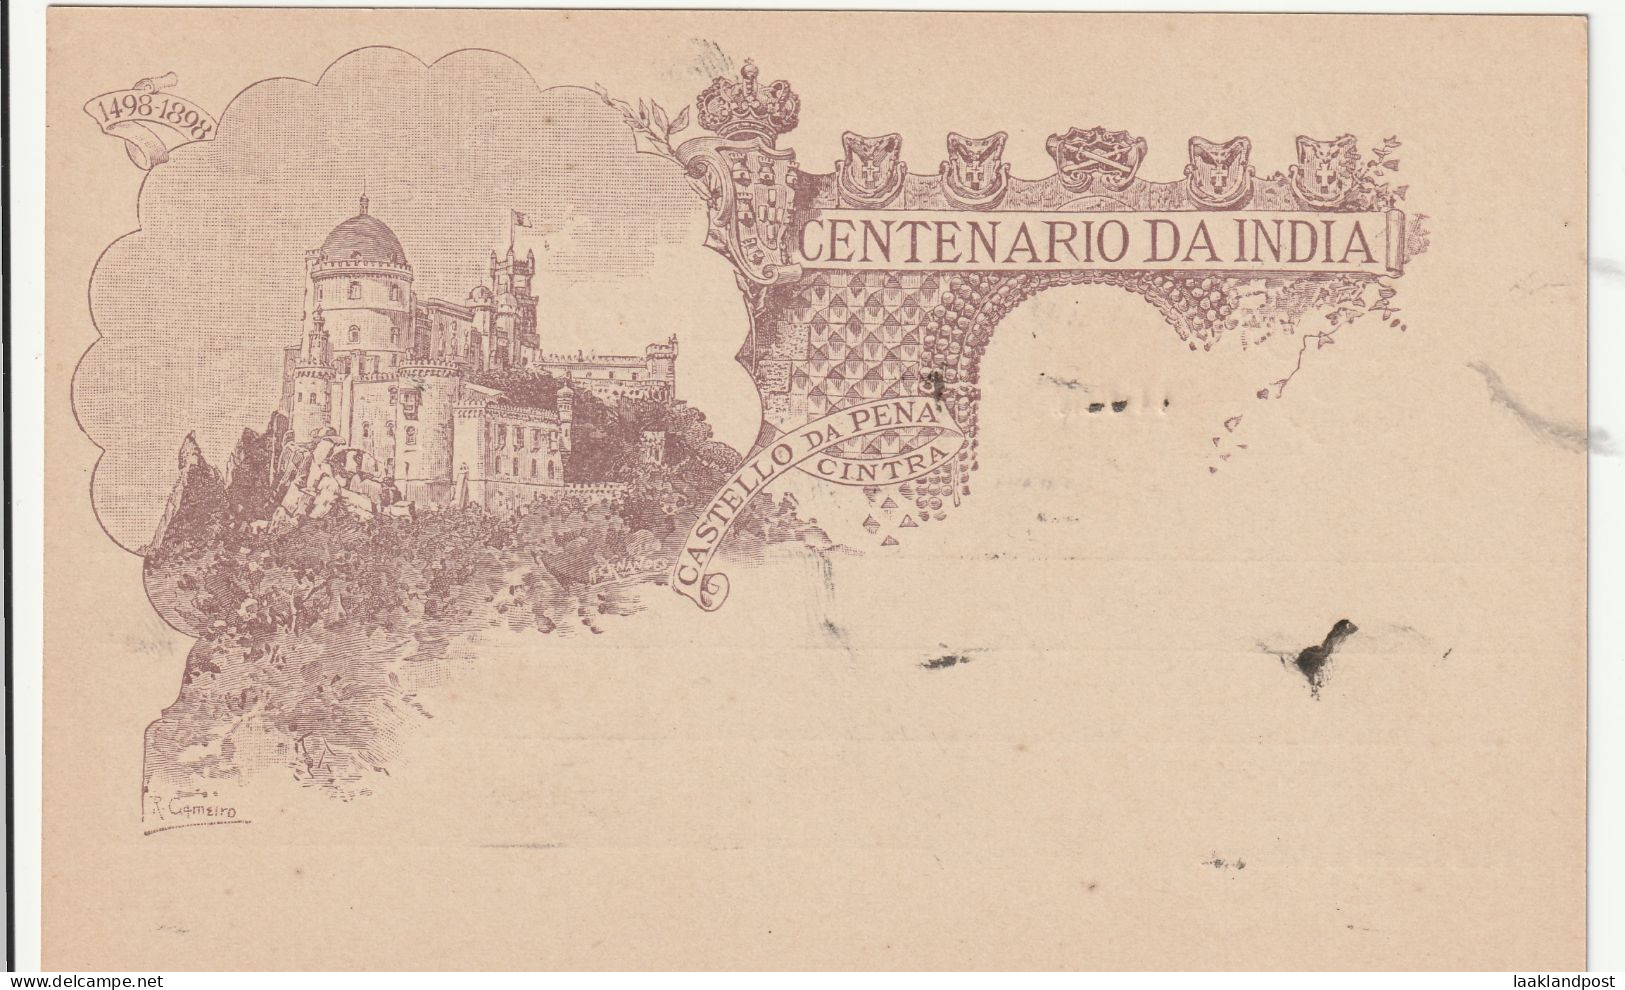 Portugiesisch Afrika 1898 Illustrated Postcard, 20 Reis, Vasco Da Gama, "Castello Da Pena Centra "unused - Africa Portoghese